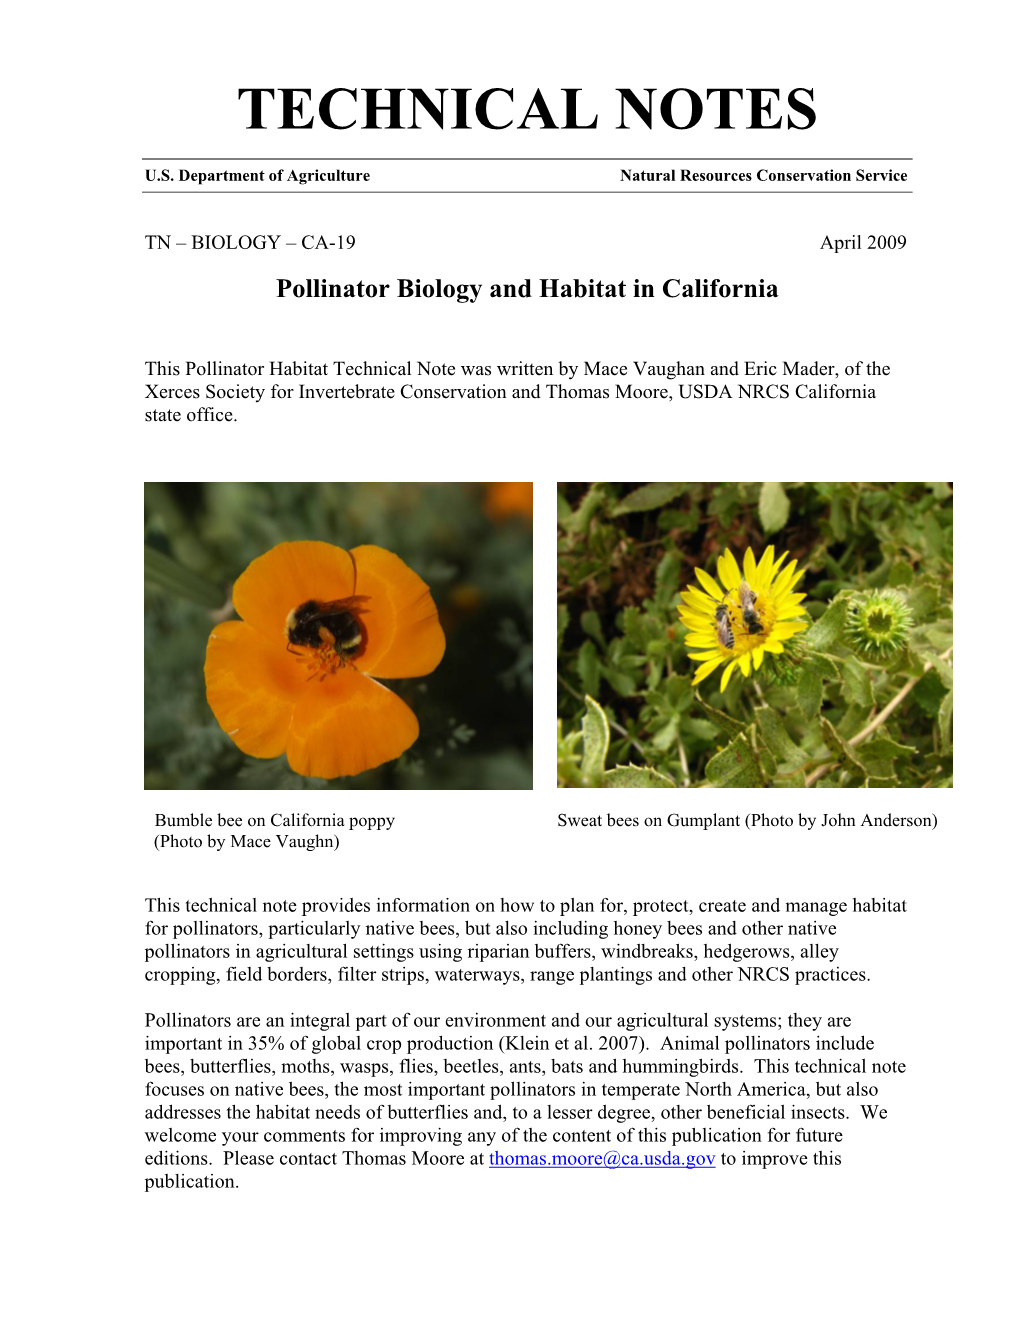 Pollinator Biology and Habitat in California